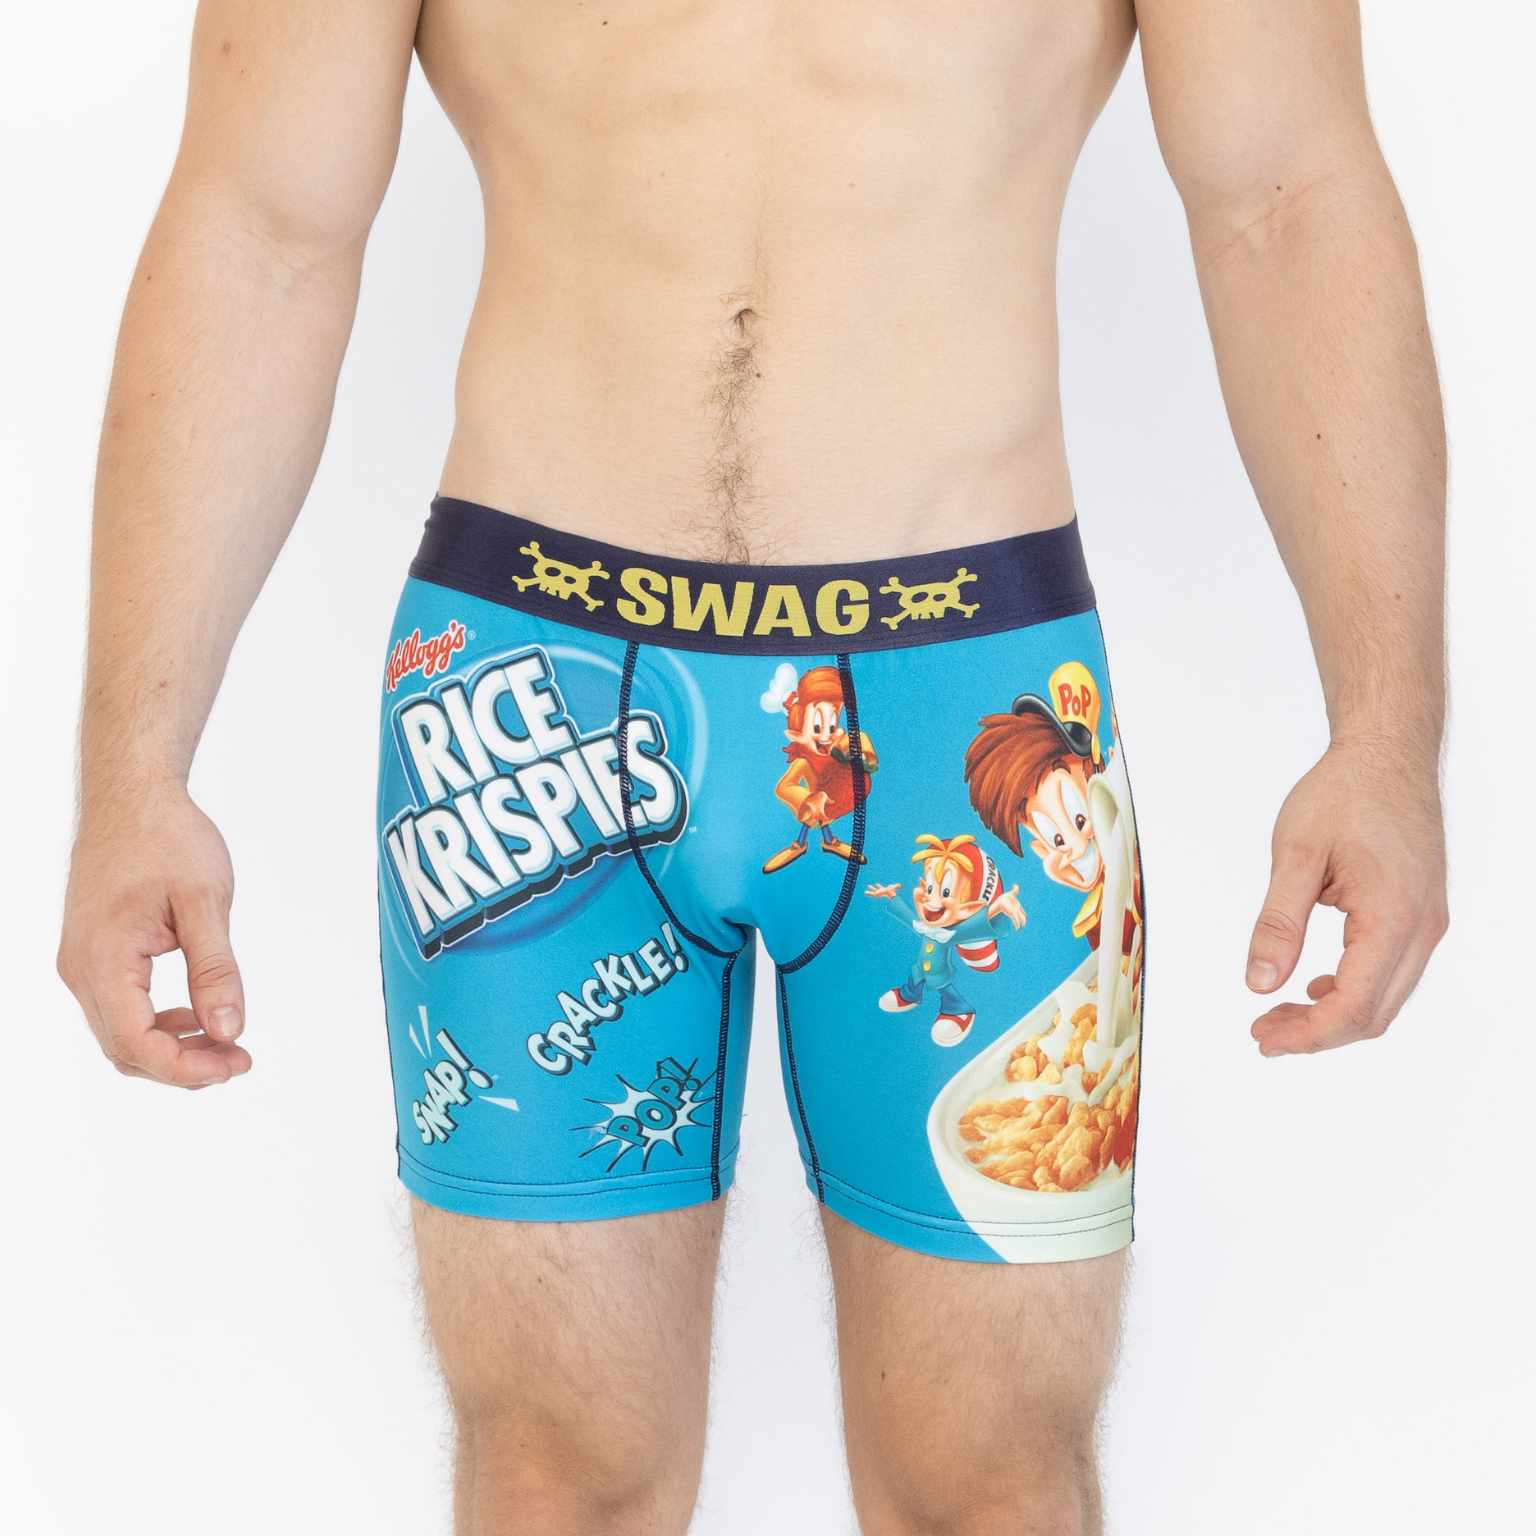 Cheetos Puffs SWAG Boxer Briefs, Men's Size M, L, Gift, Food